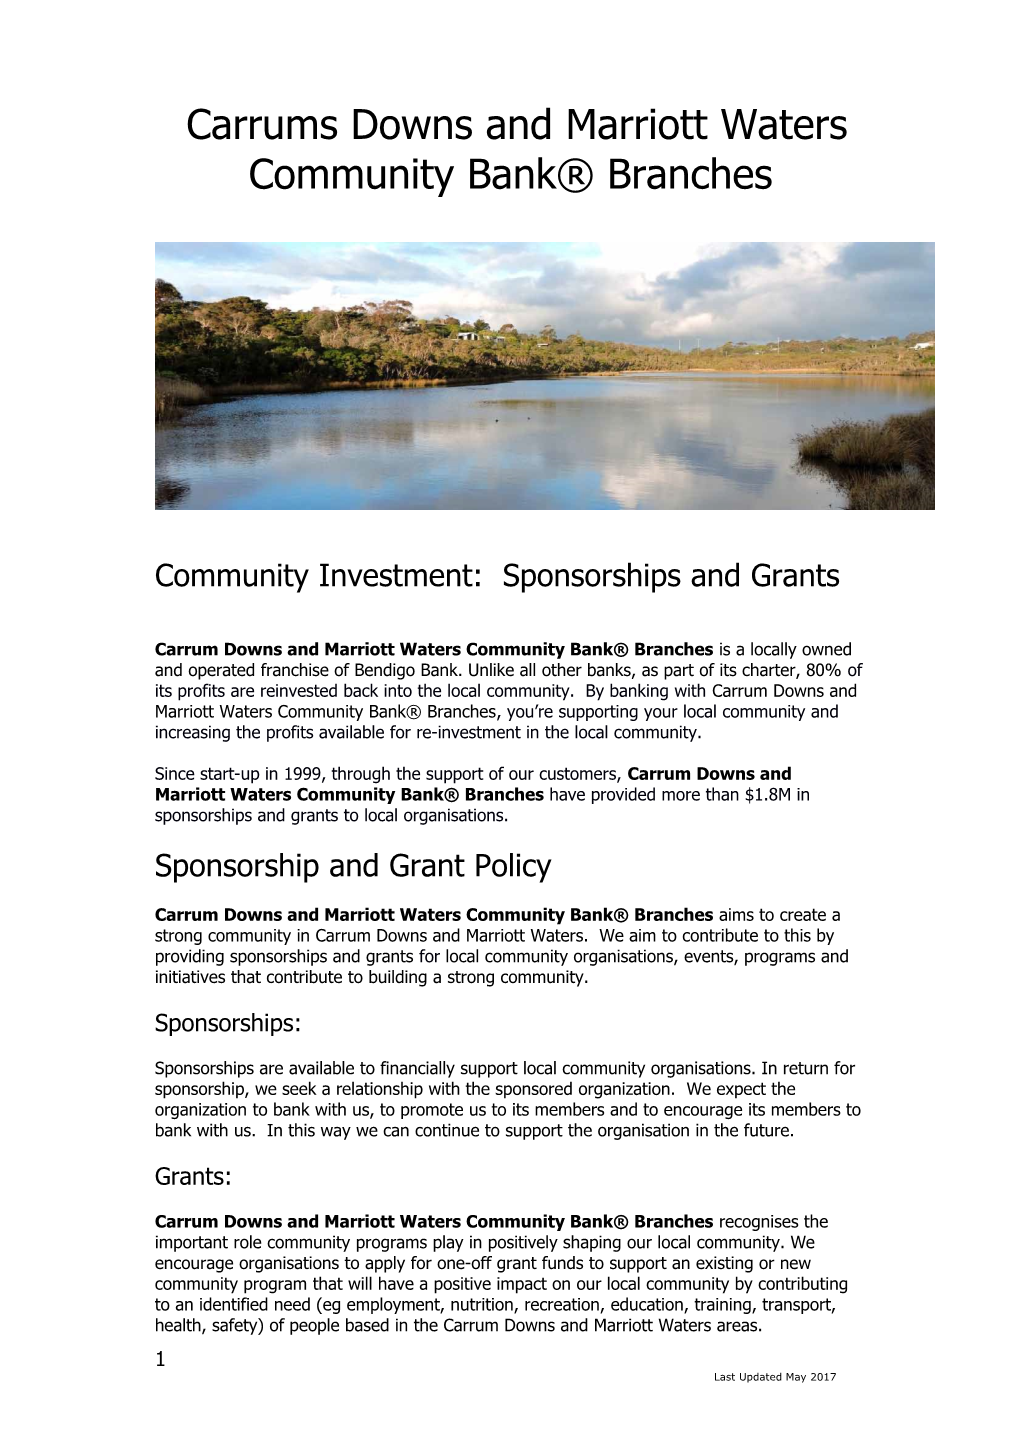 Mount Martha Community Enterprises Ltd. Sponsorship Application Form